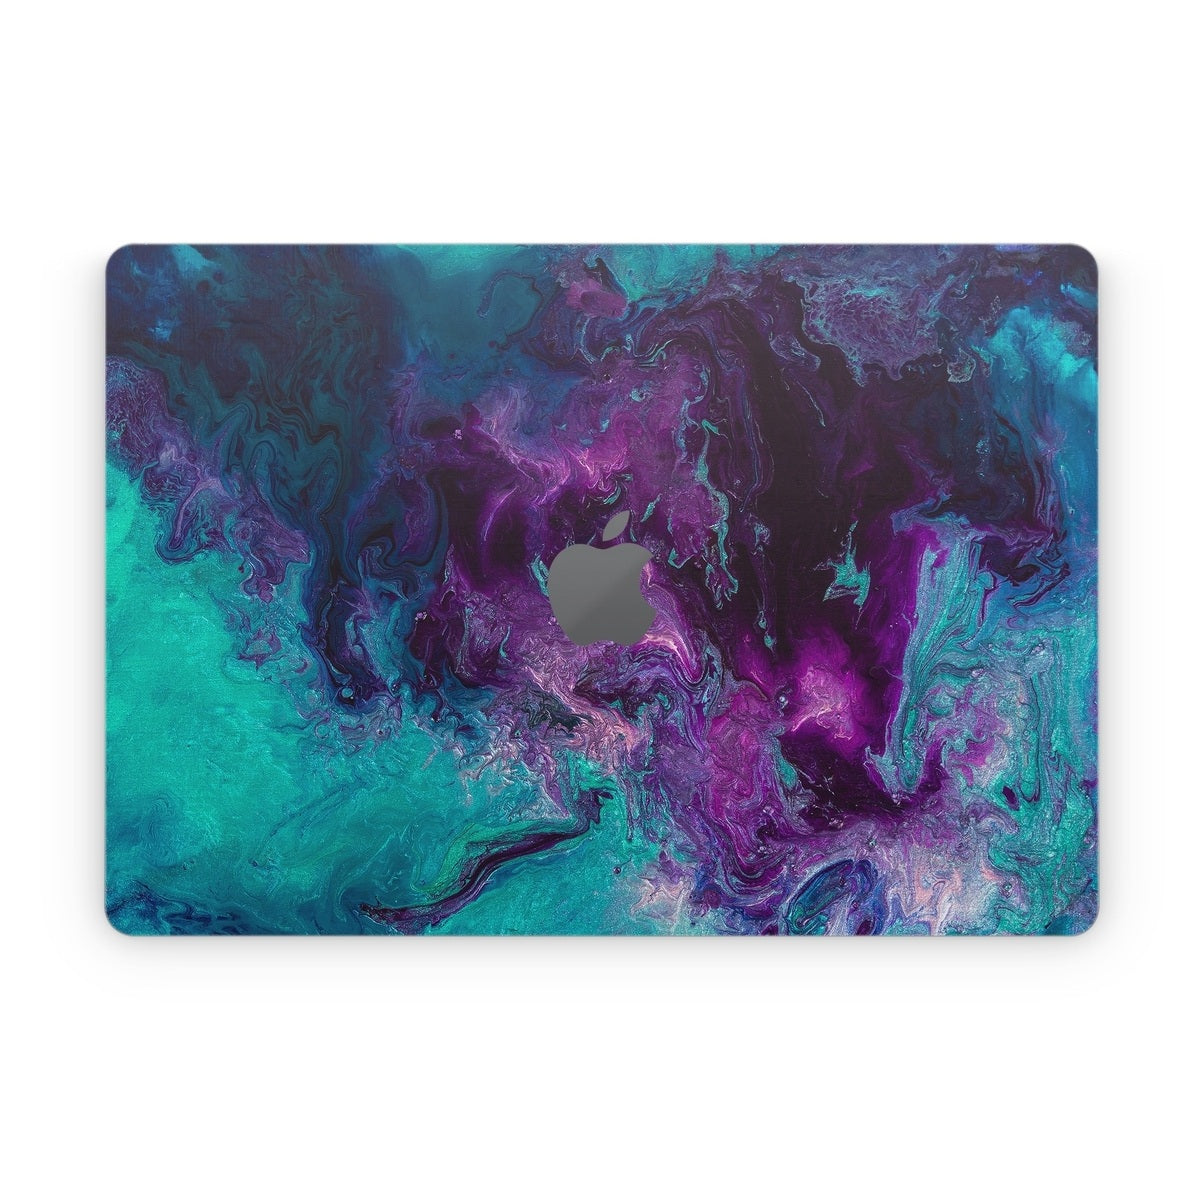 Nebulosity - Apple MacBook Skin